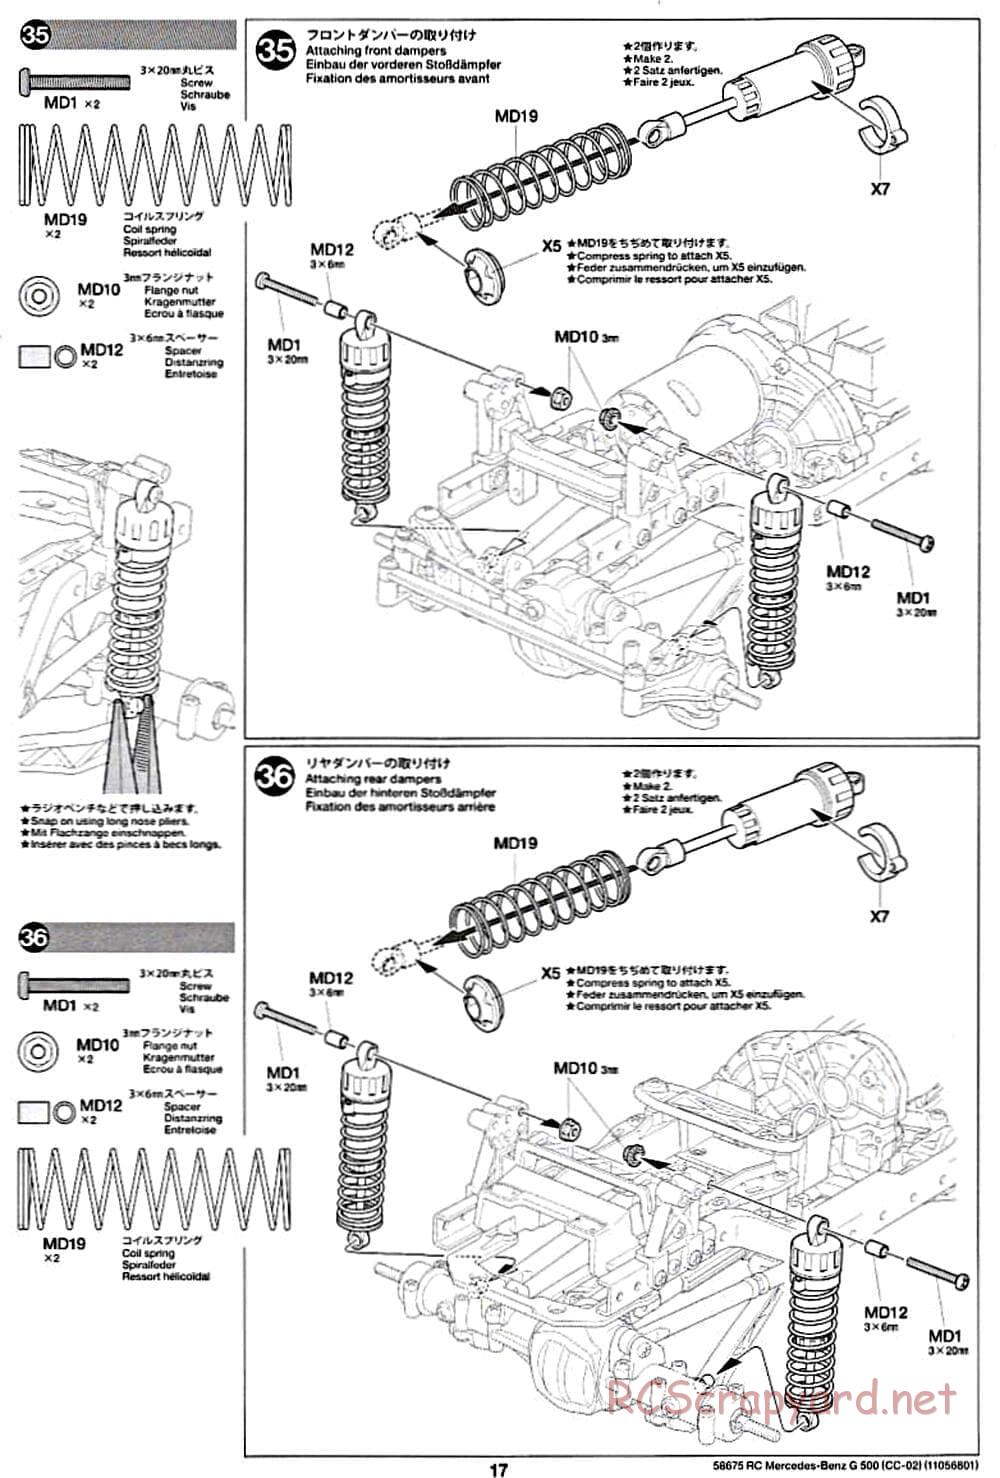 Tamiya - Mercedes-Benz G500 - CC-02 Chassis - Manual - Page 17